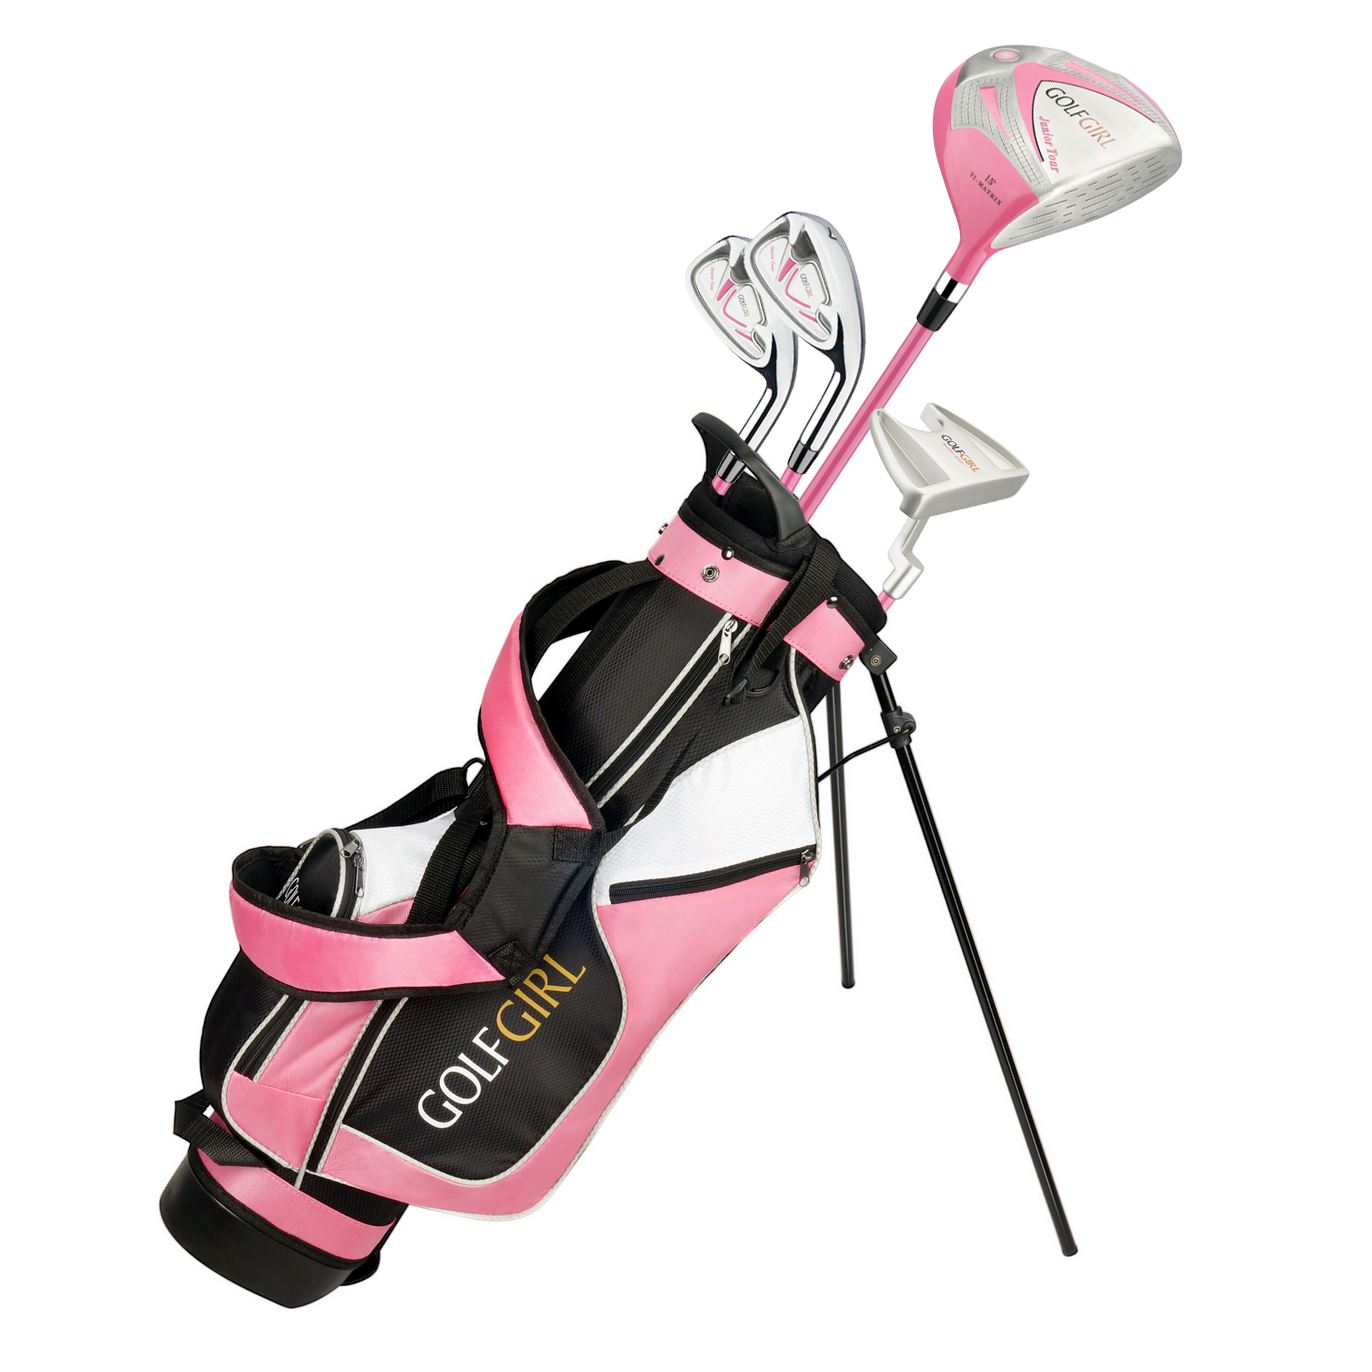 Golf Girl Junior Girls Golf Set V3 with Pink Clubs and Bag, Left Hand